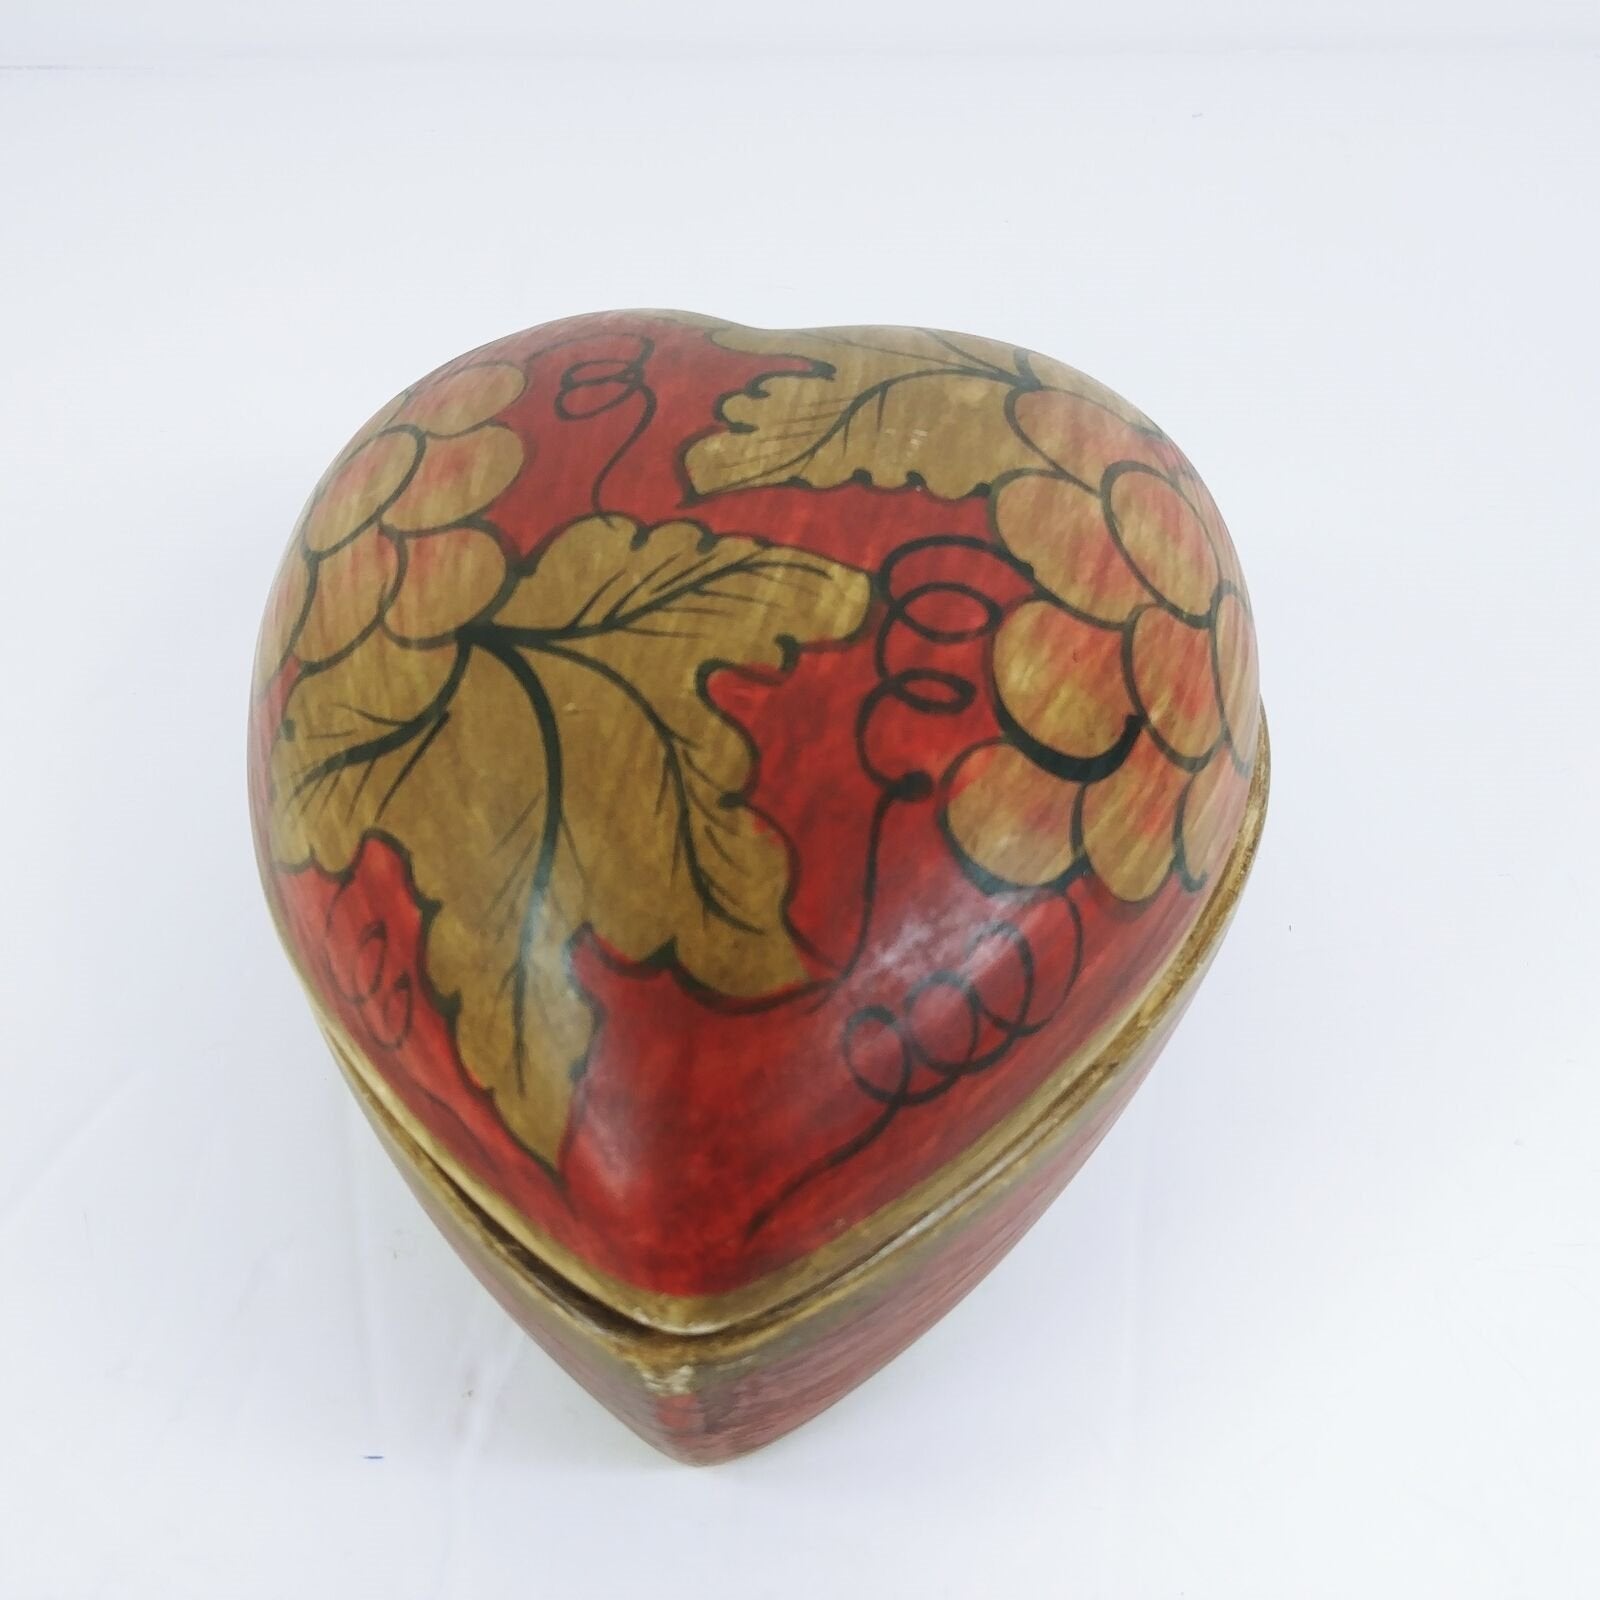 Trinket Vanity Personal Storage Heart Shaped Box Lid Ceramic Grapevine Design